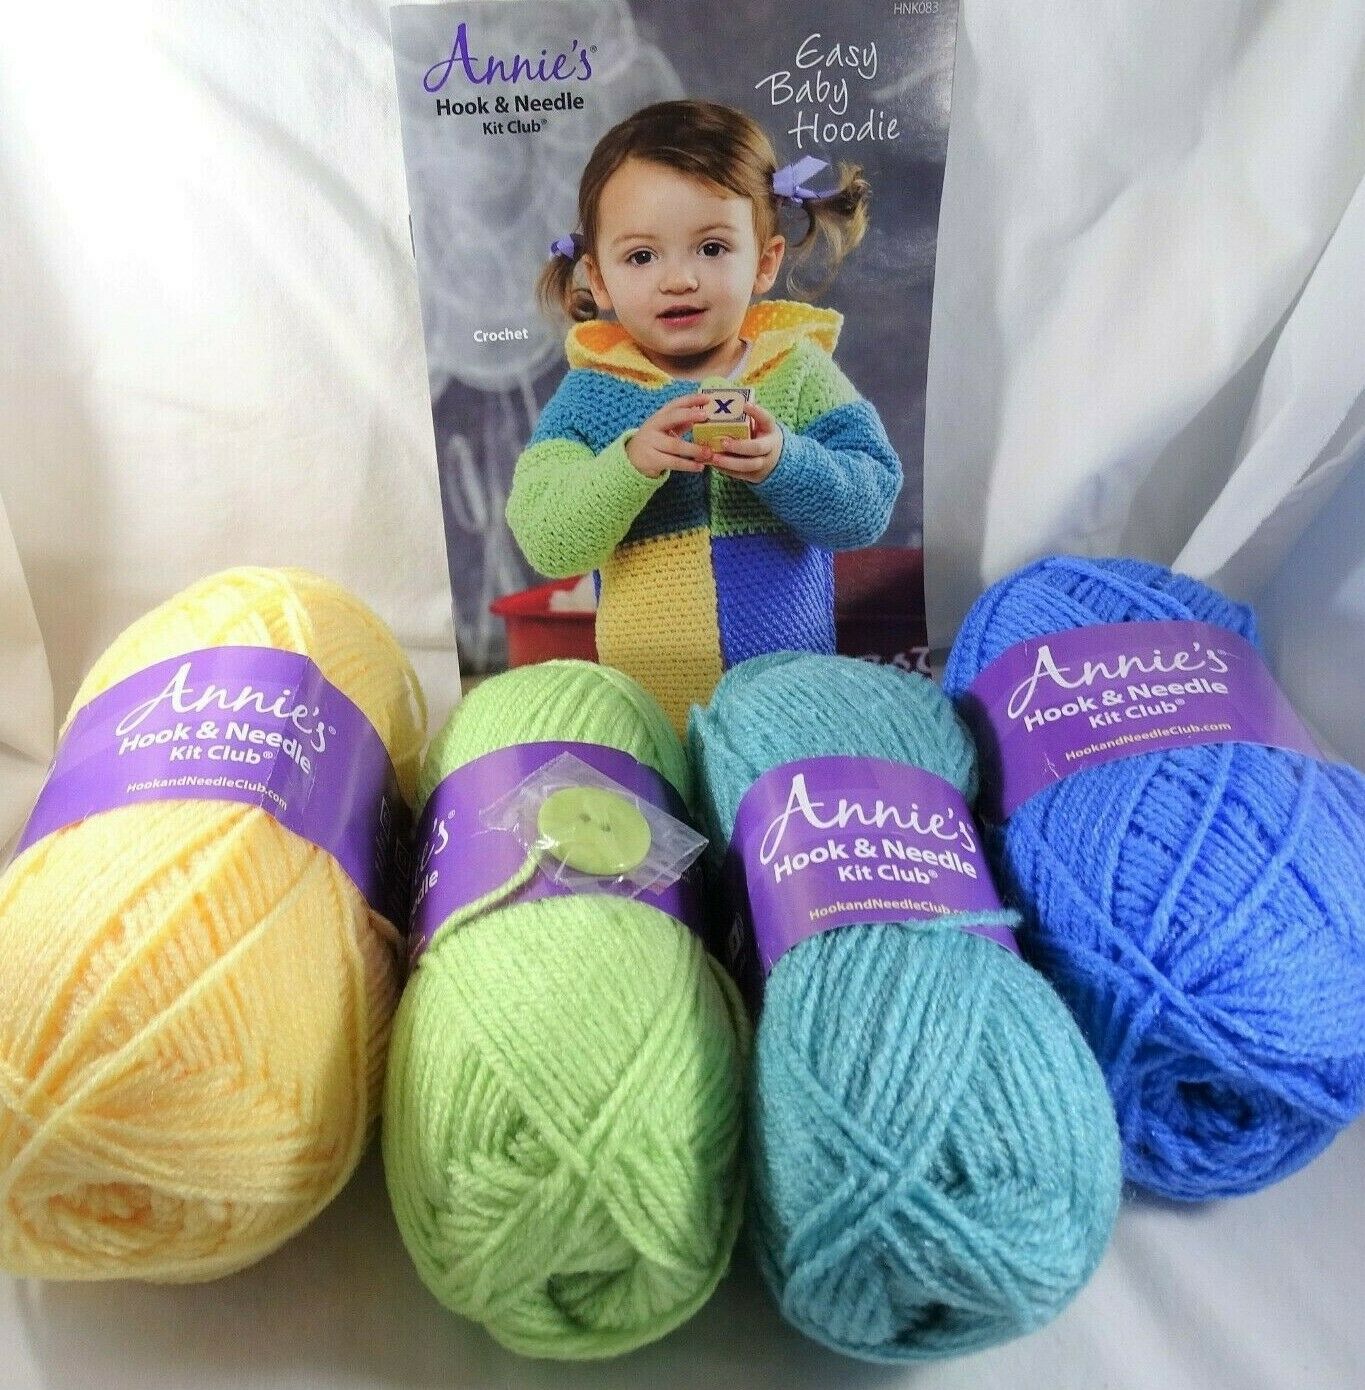 Annie’s Hook & Needle Kit Club Crochet Easy Baby Hoodie #hnk083 New Yarn Sweater